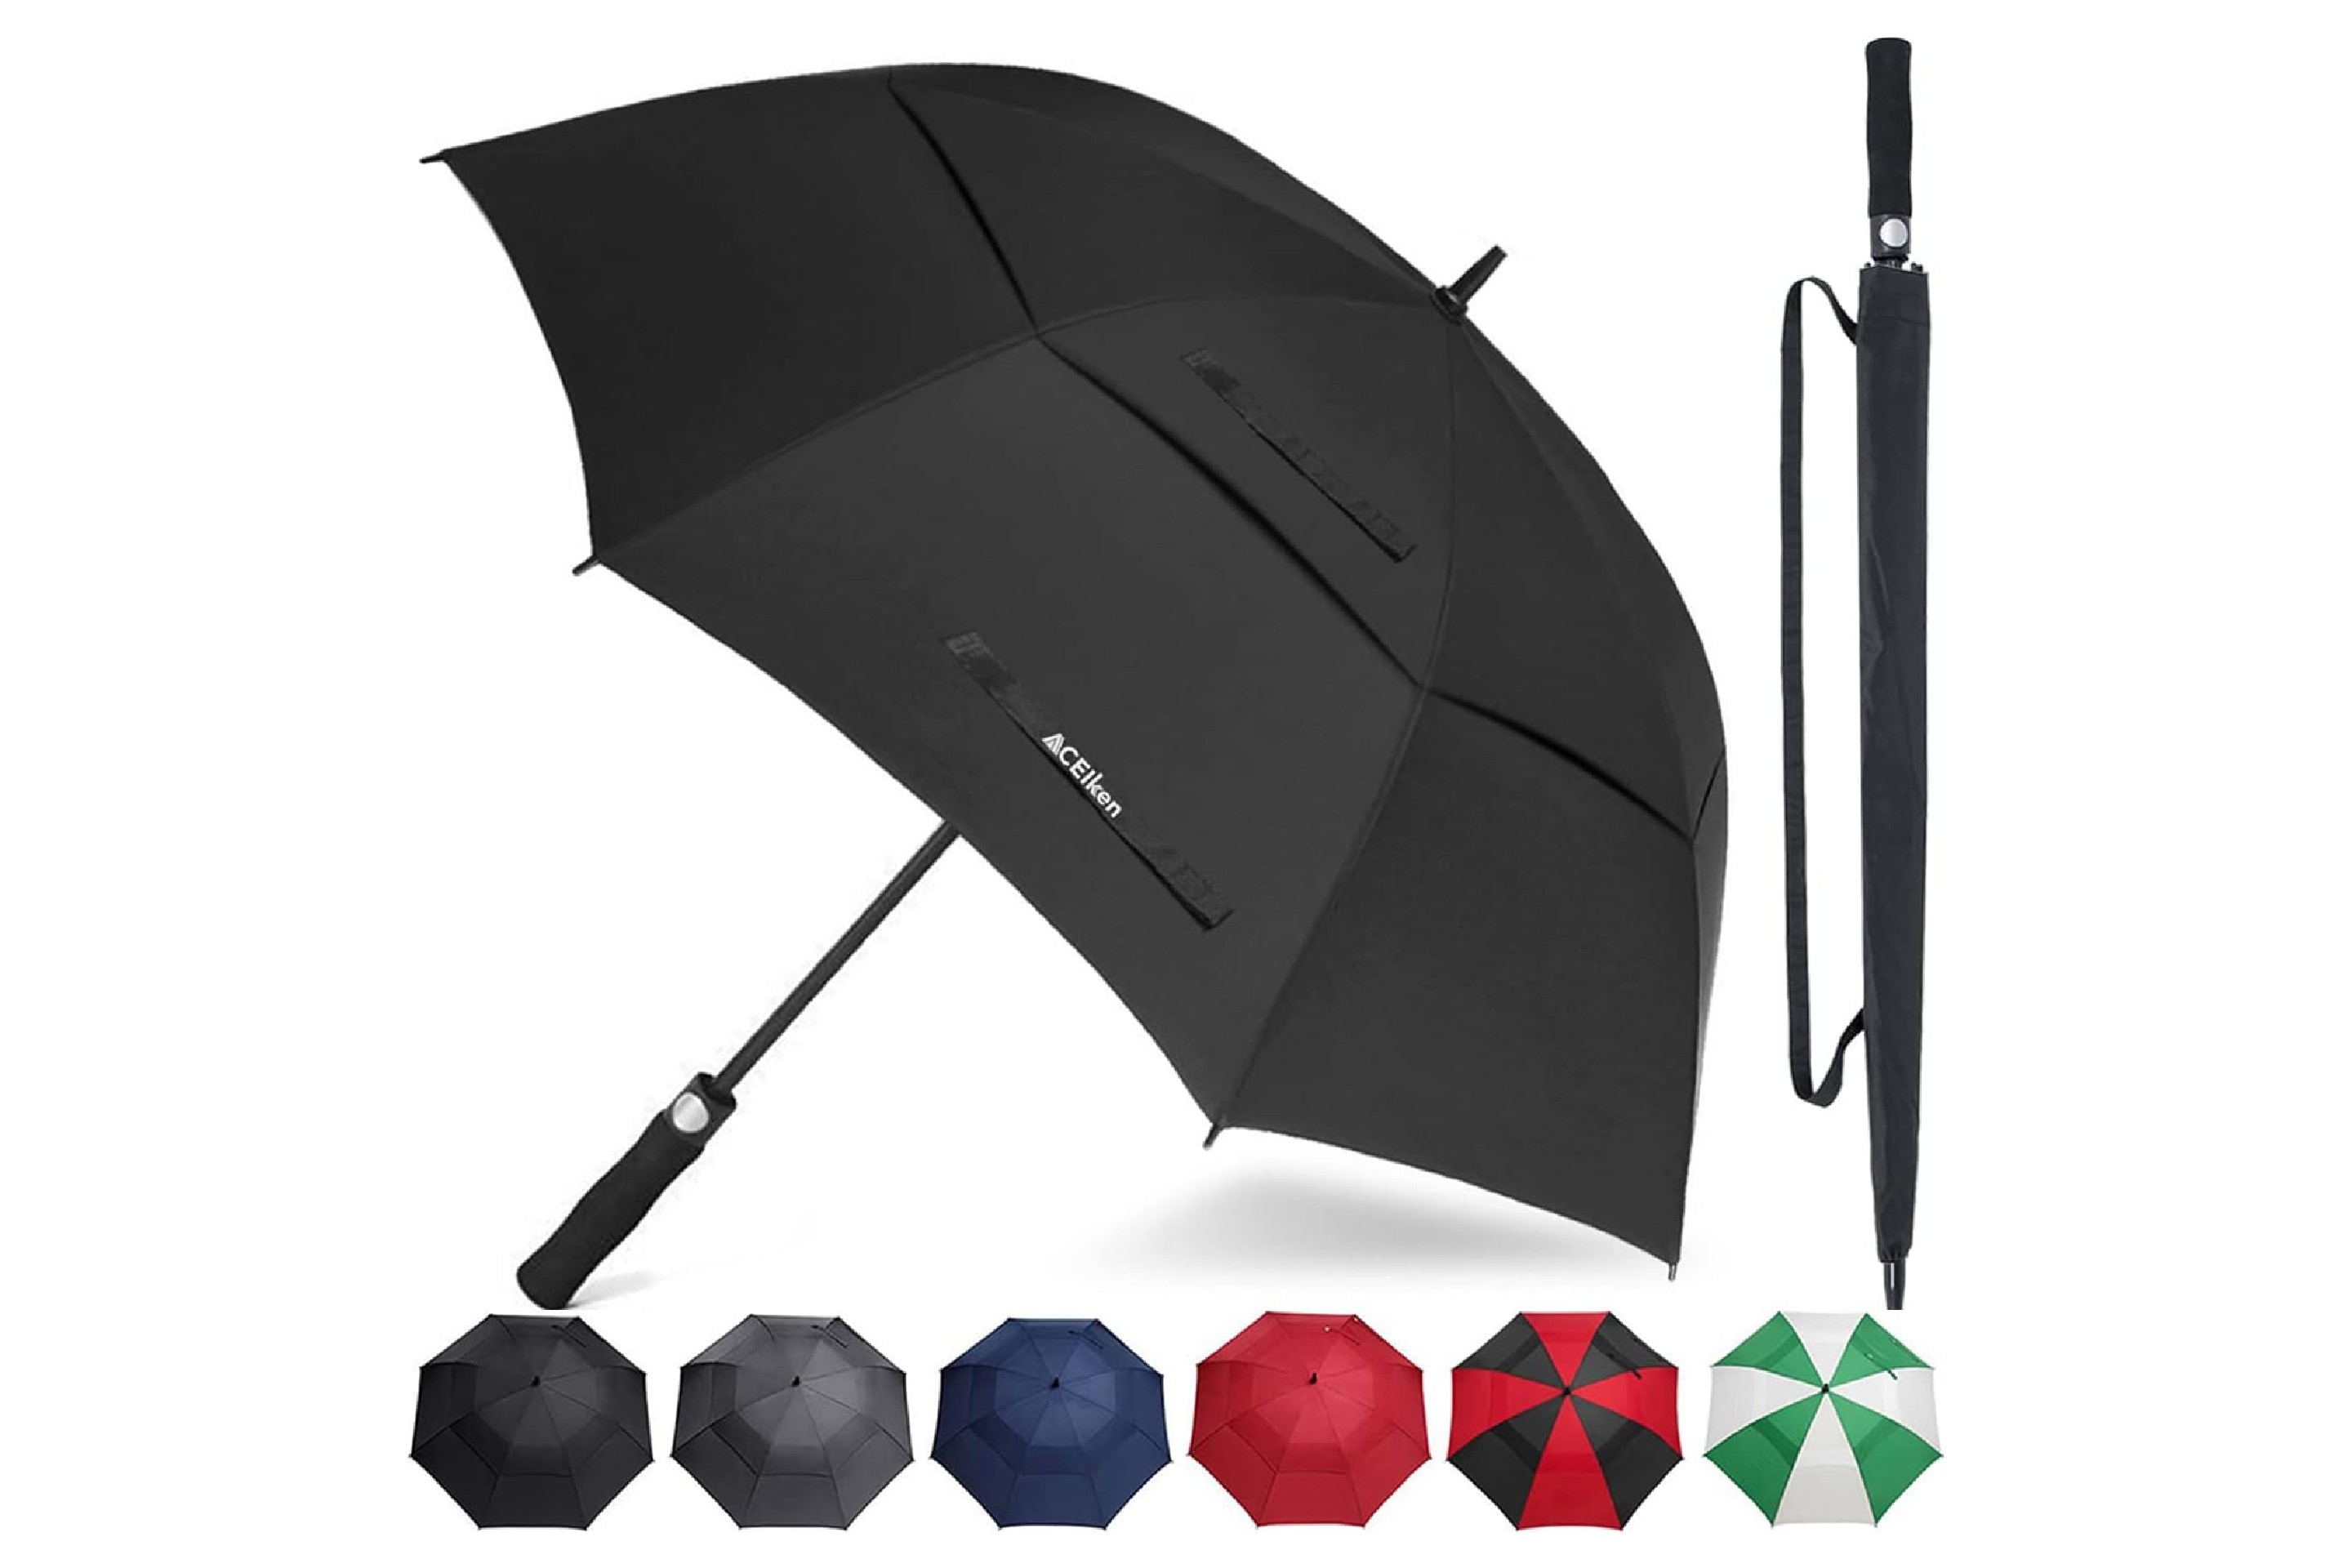 ACEIken UB001 Golf Umbrella